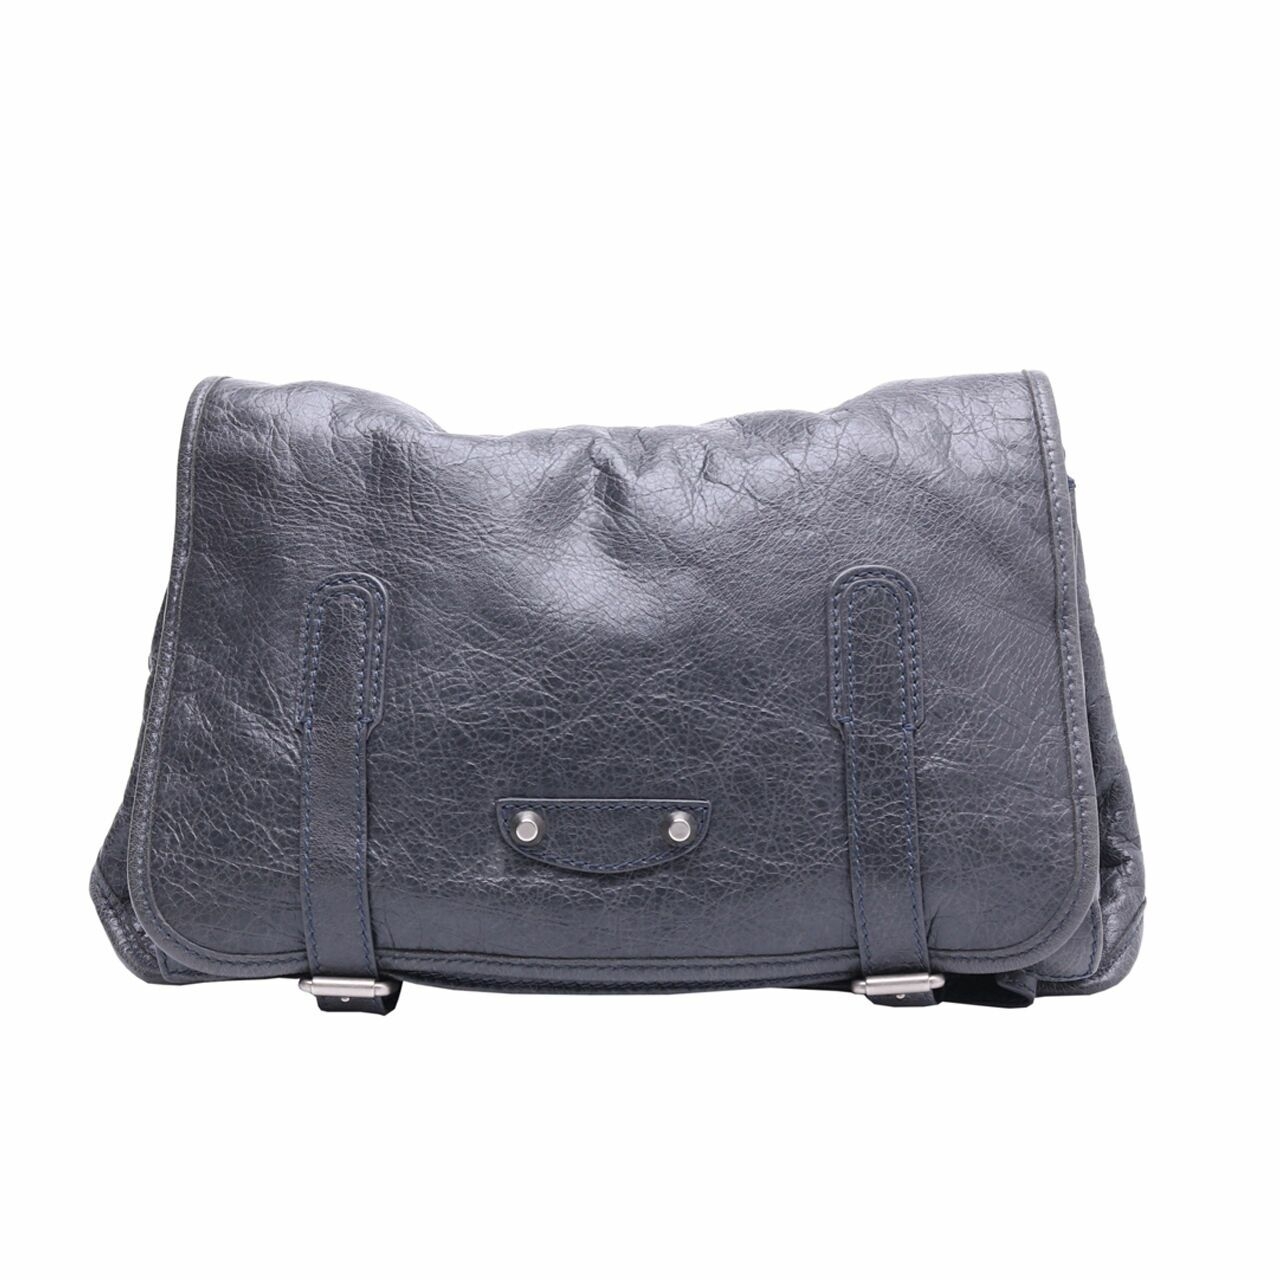 Balenciaga Unisex Leather Fanny Pack Dark Gray Waist Bag